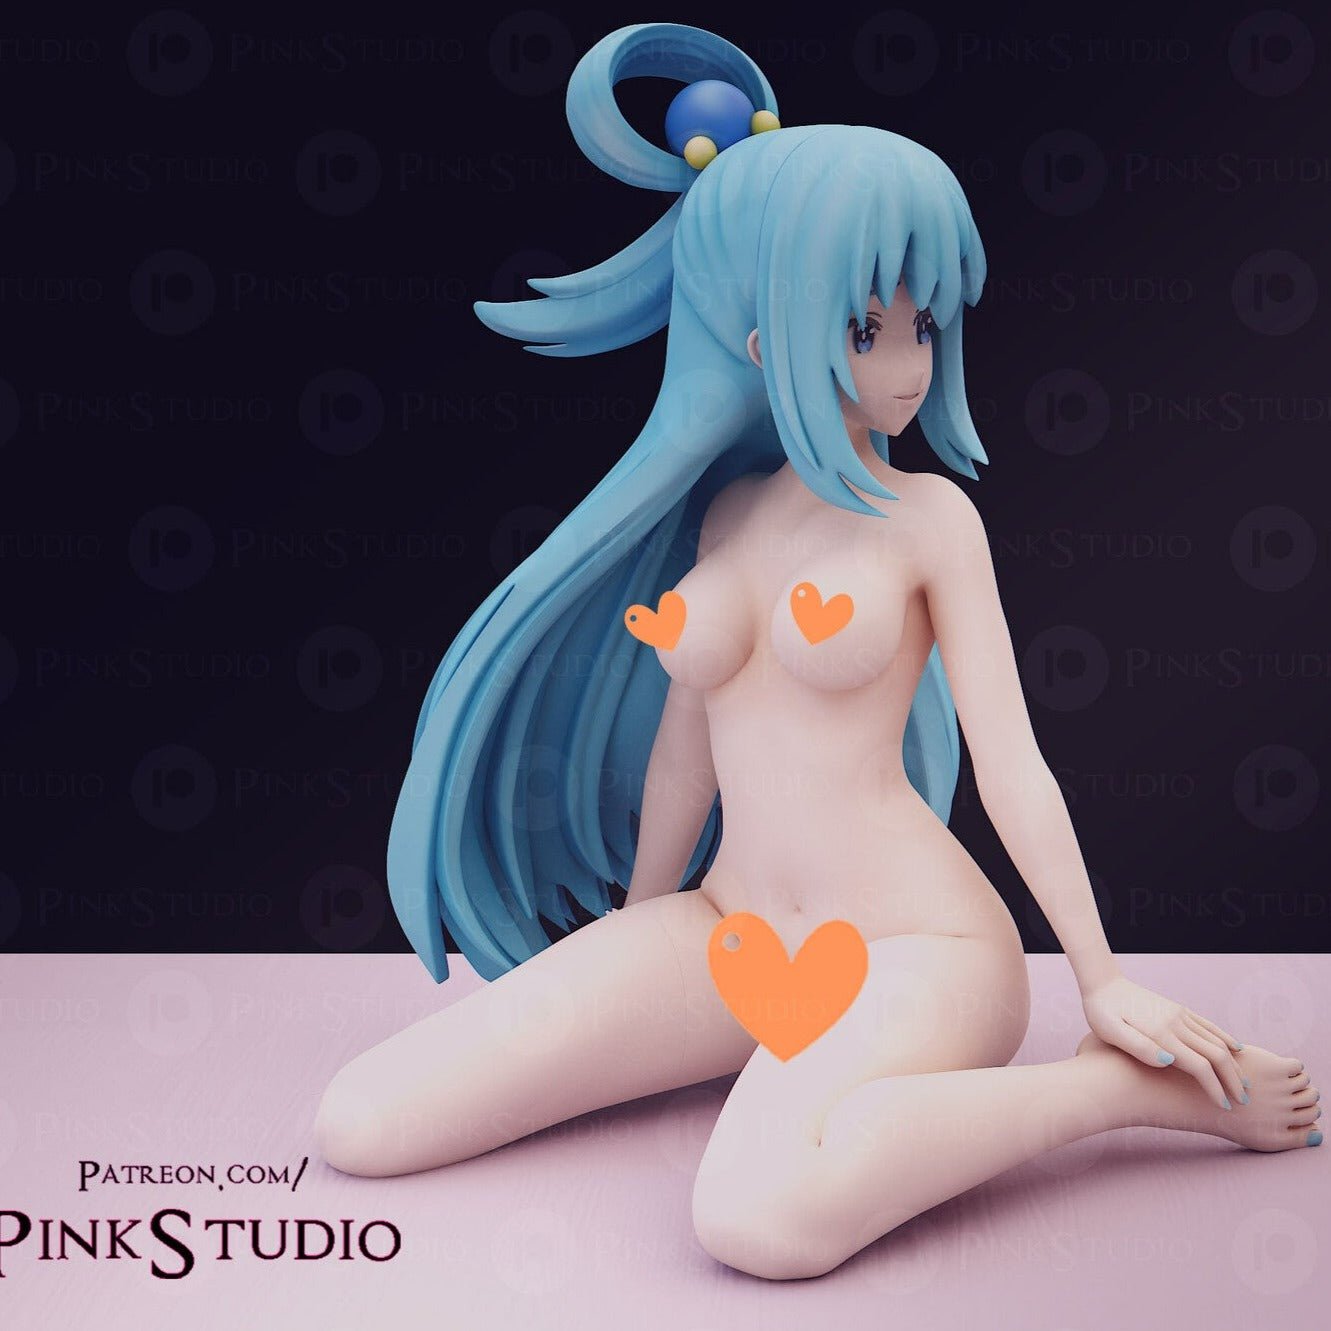 Aqua NSFW 3D Printed Anime Figurine Fanart by Pink Studio